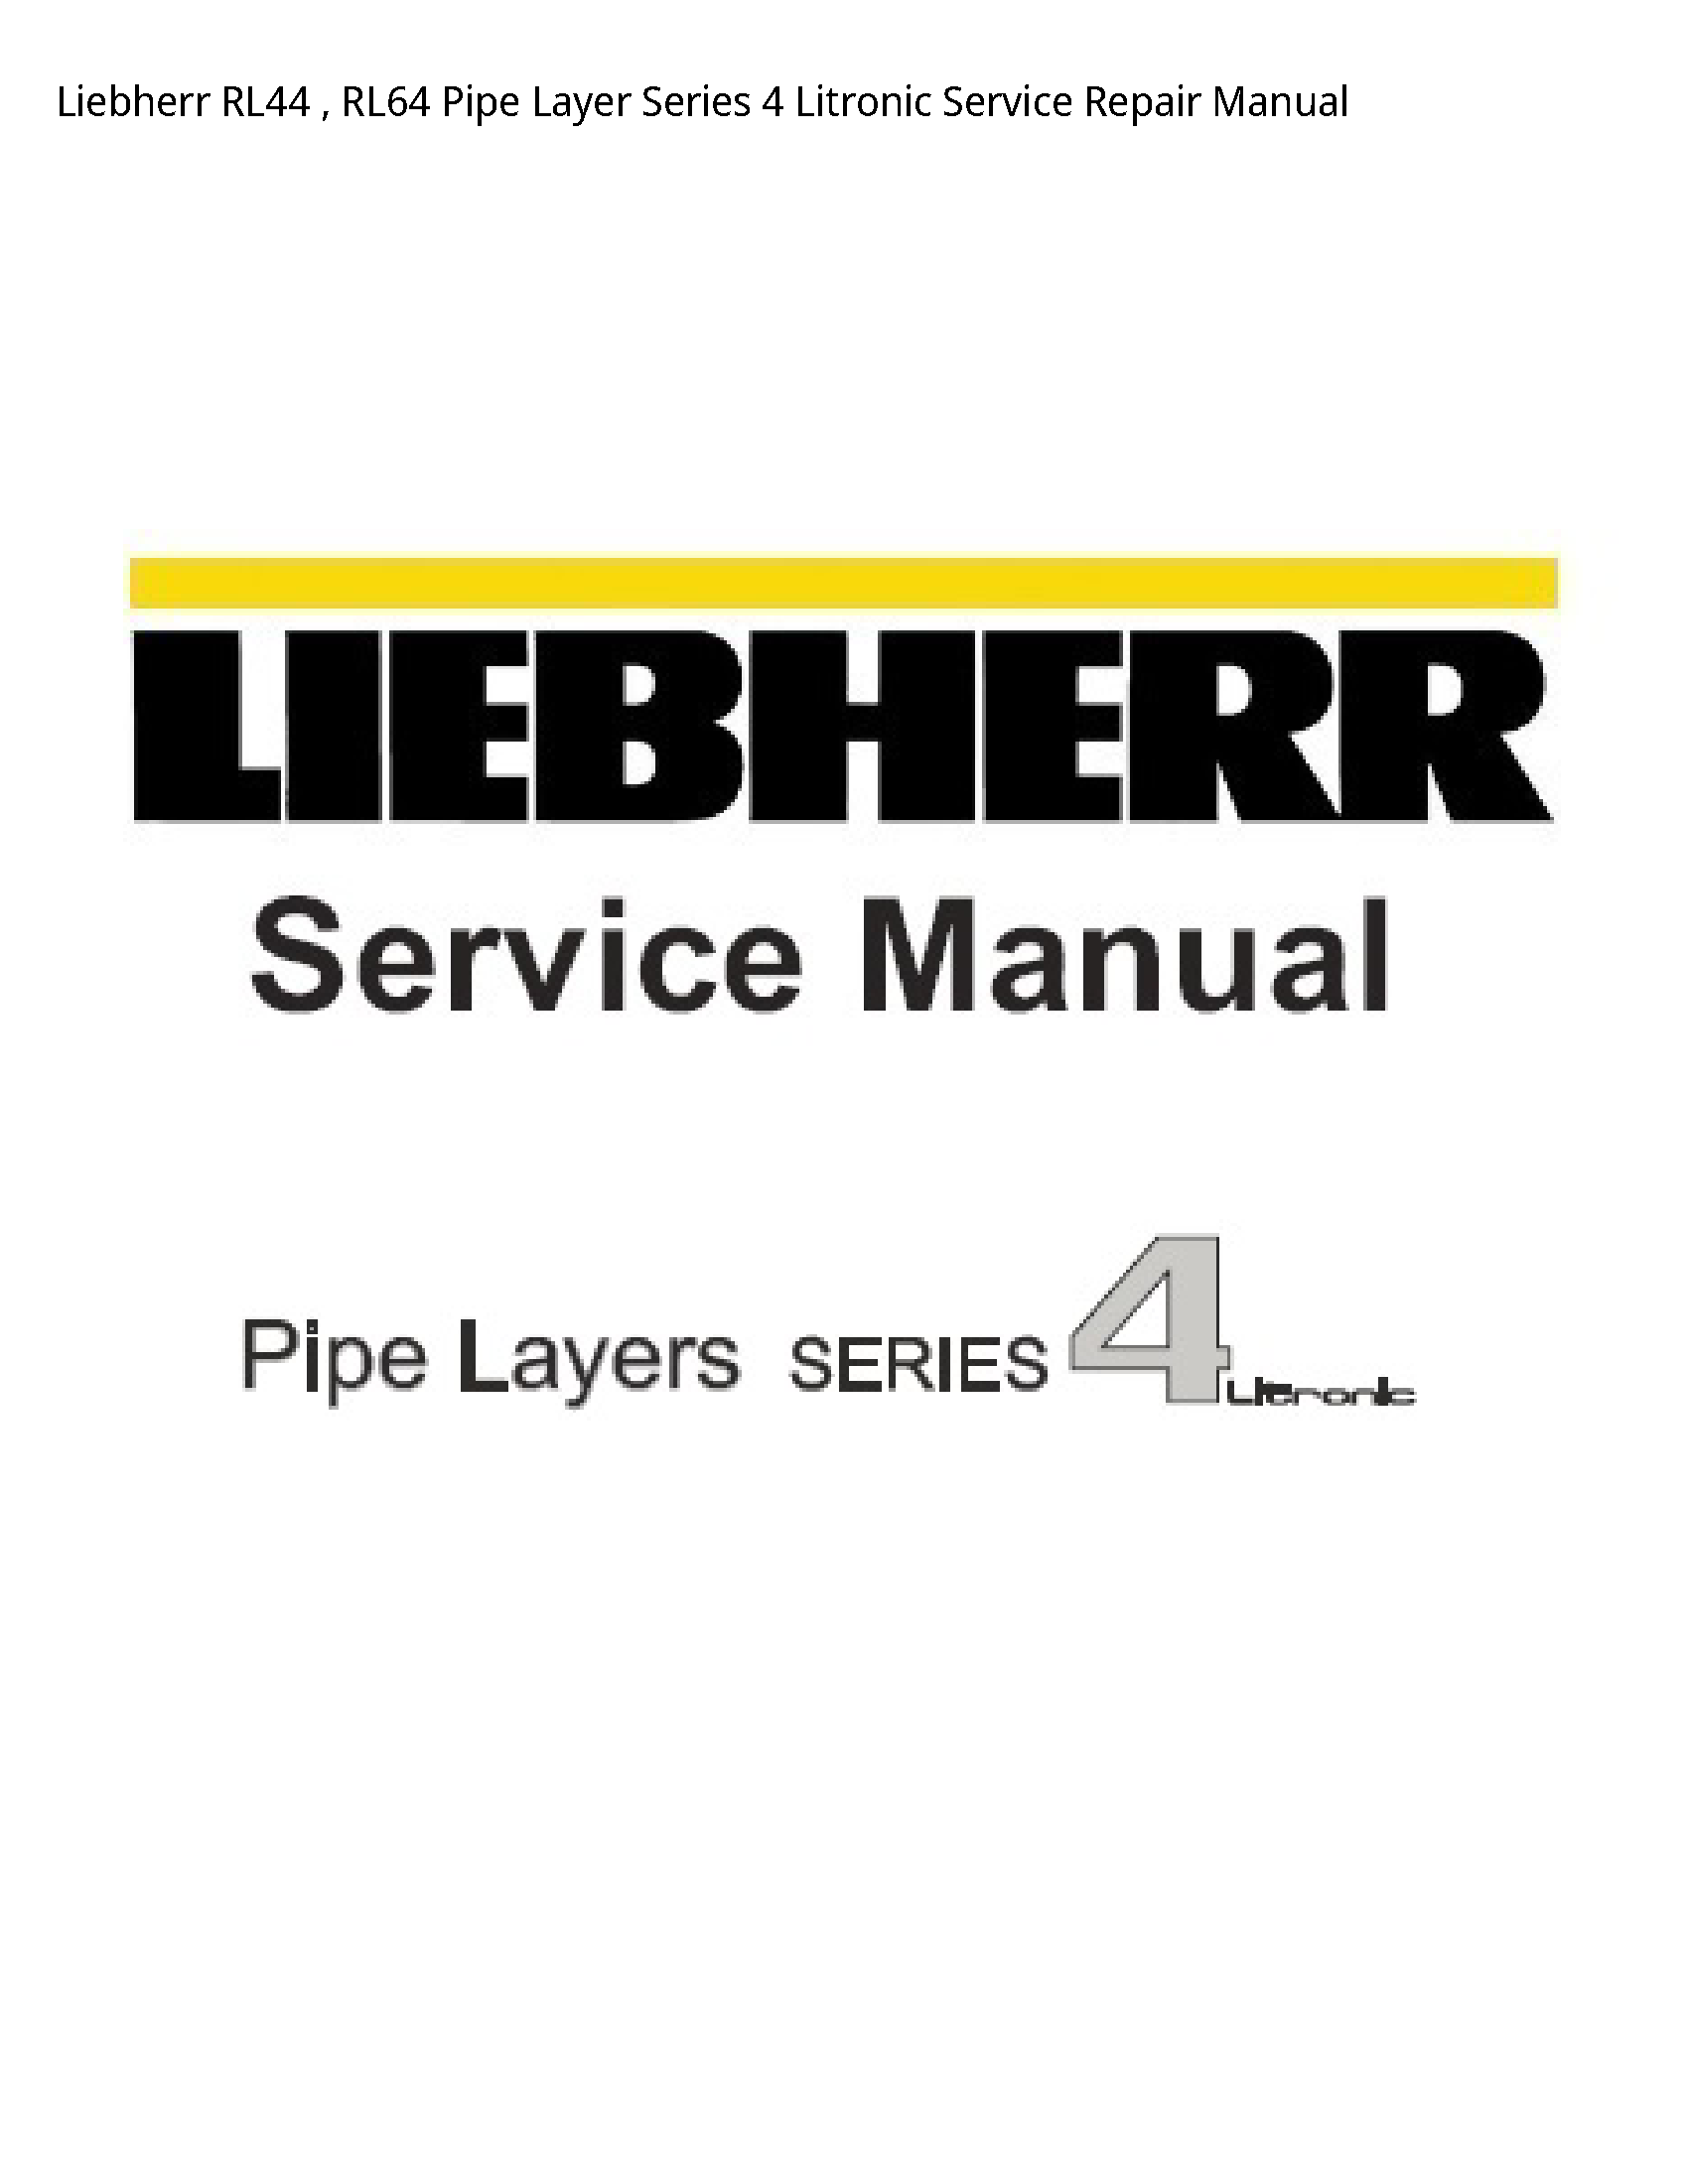 Liebherr RL44 Pipe Layer Series Litronic manual